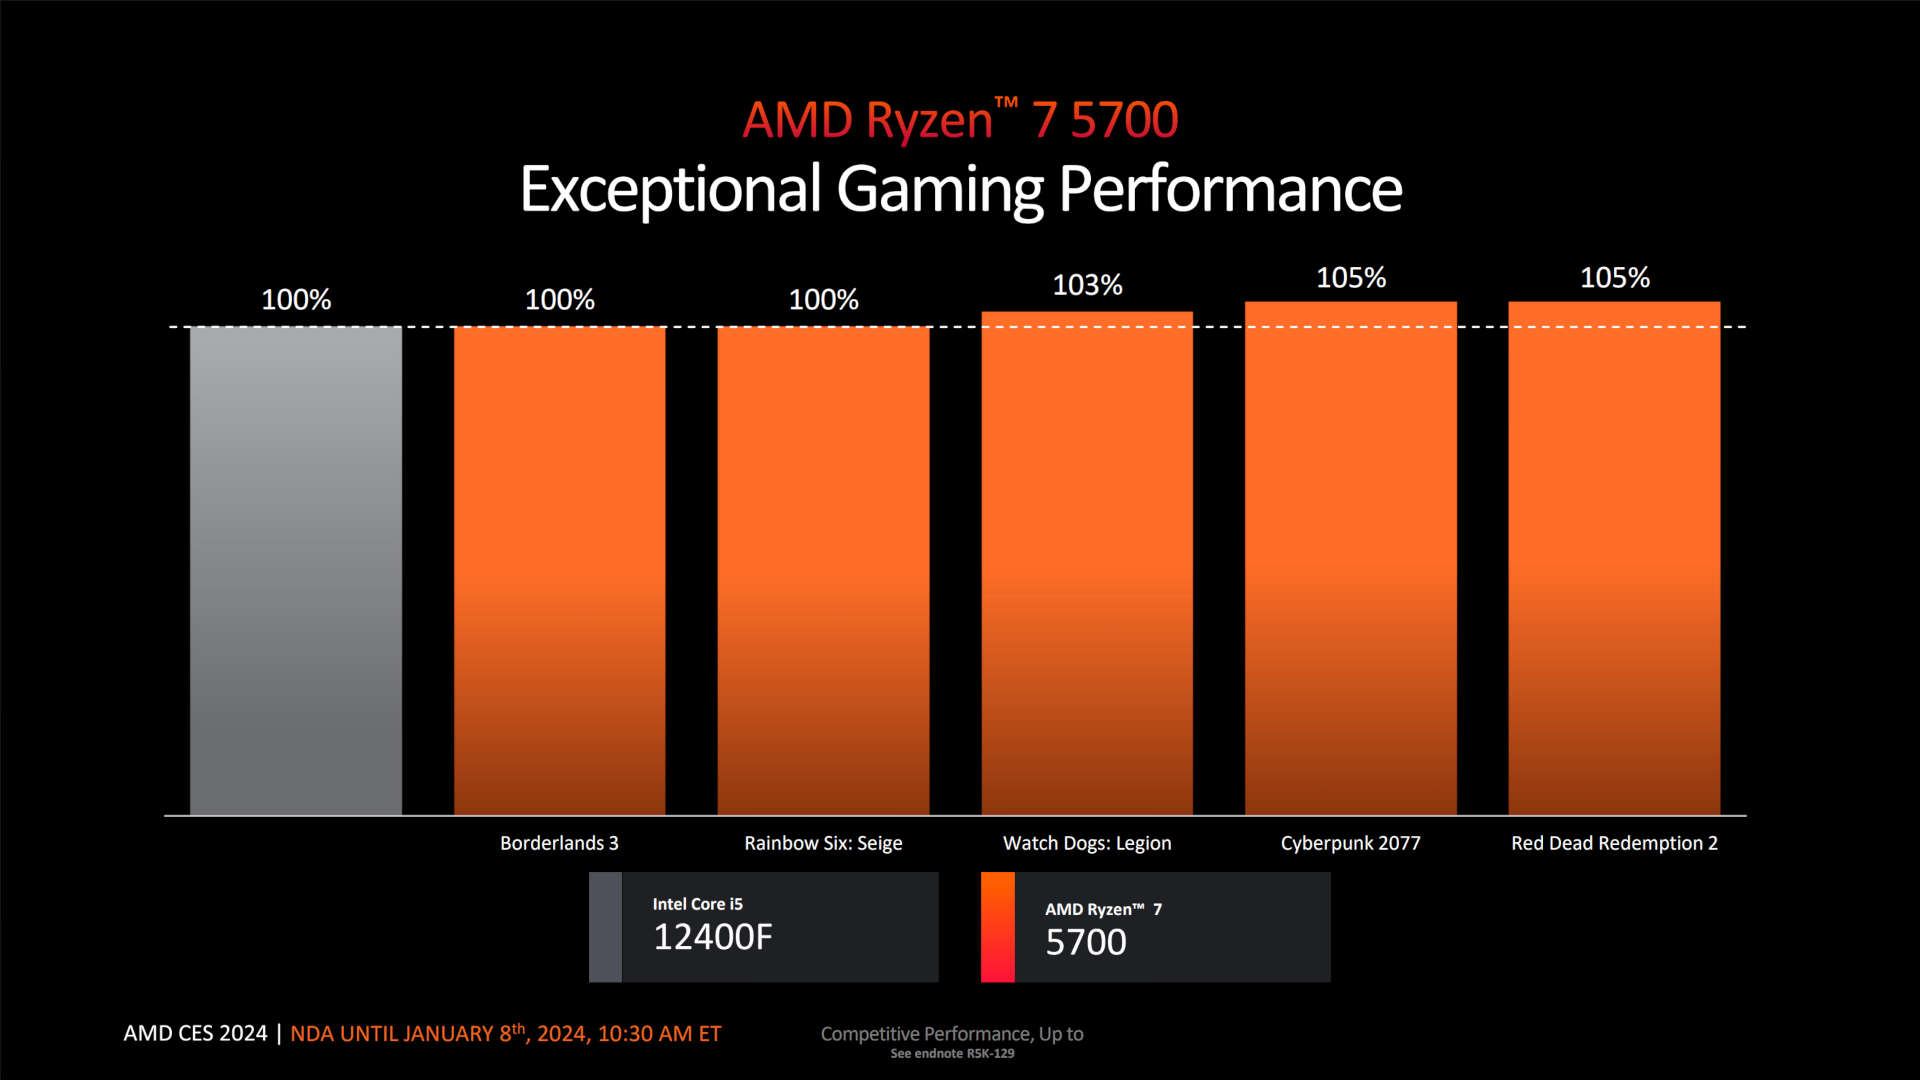 AMD Ryzen 7 5700 promotional information